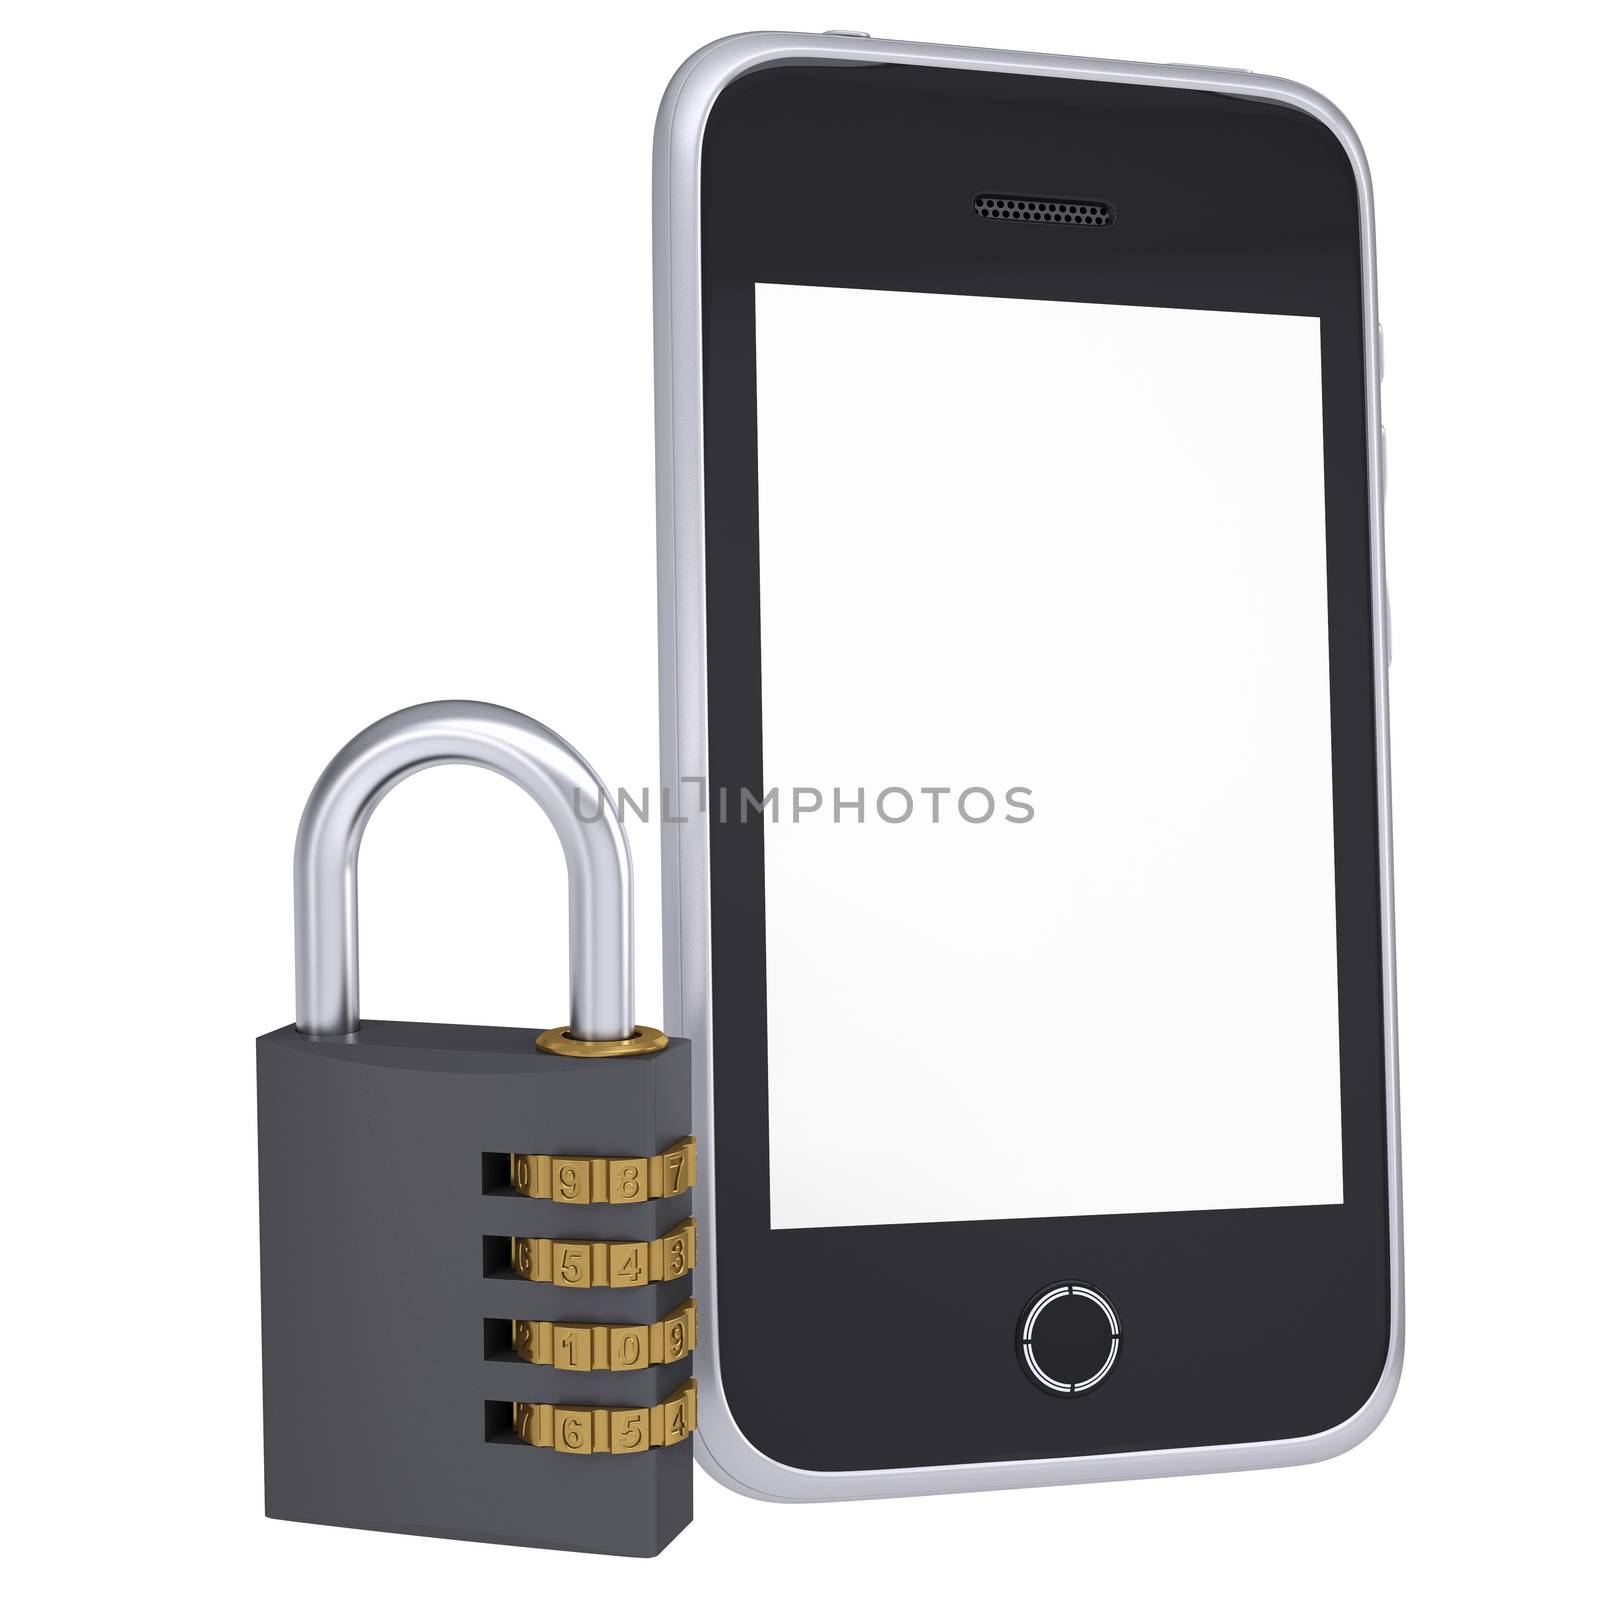 Code lock near smartphone by cherezoff